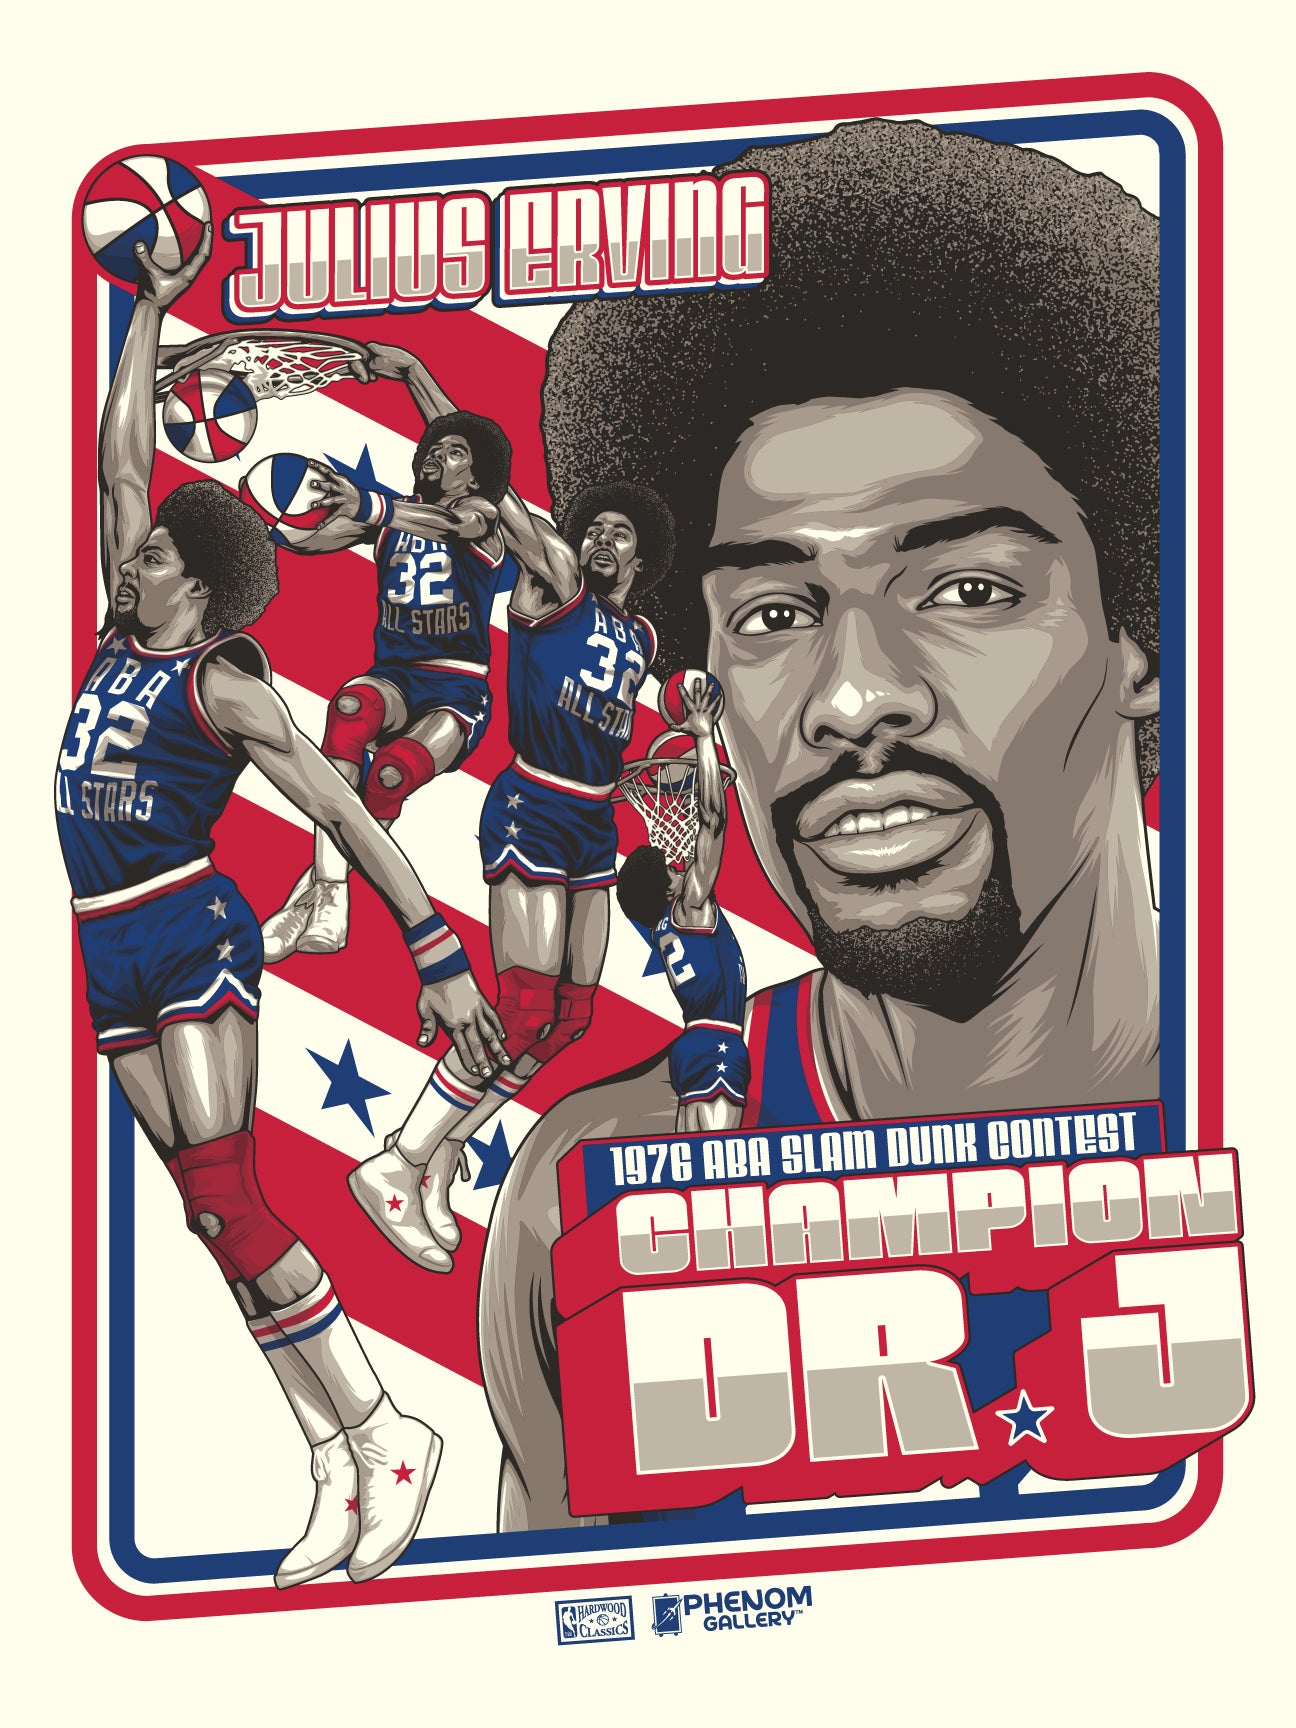 Video: History of the NBA Slam Dunk Contest - Julius Erving (Dr. J)